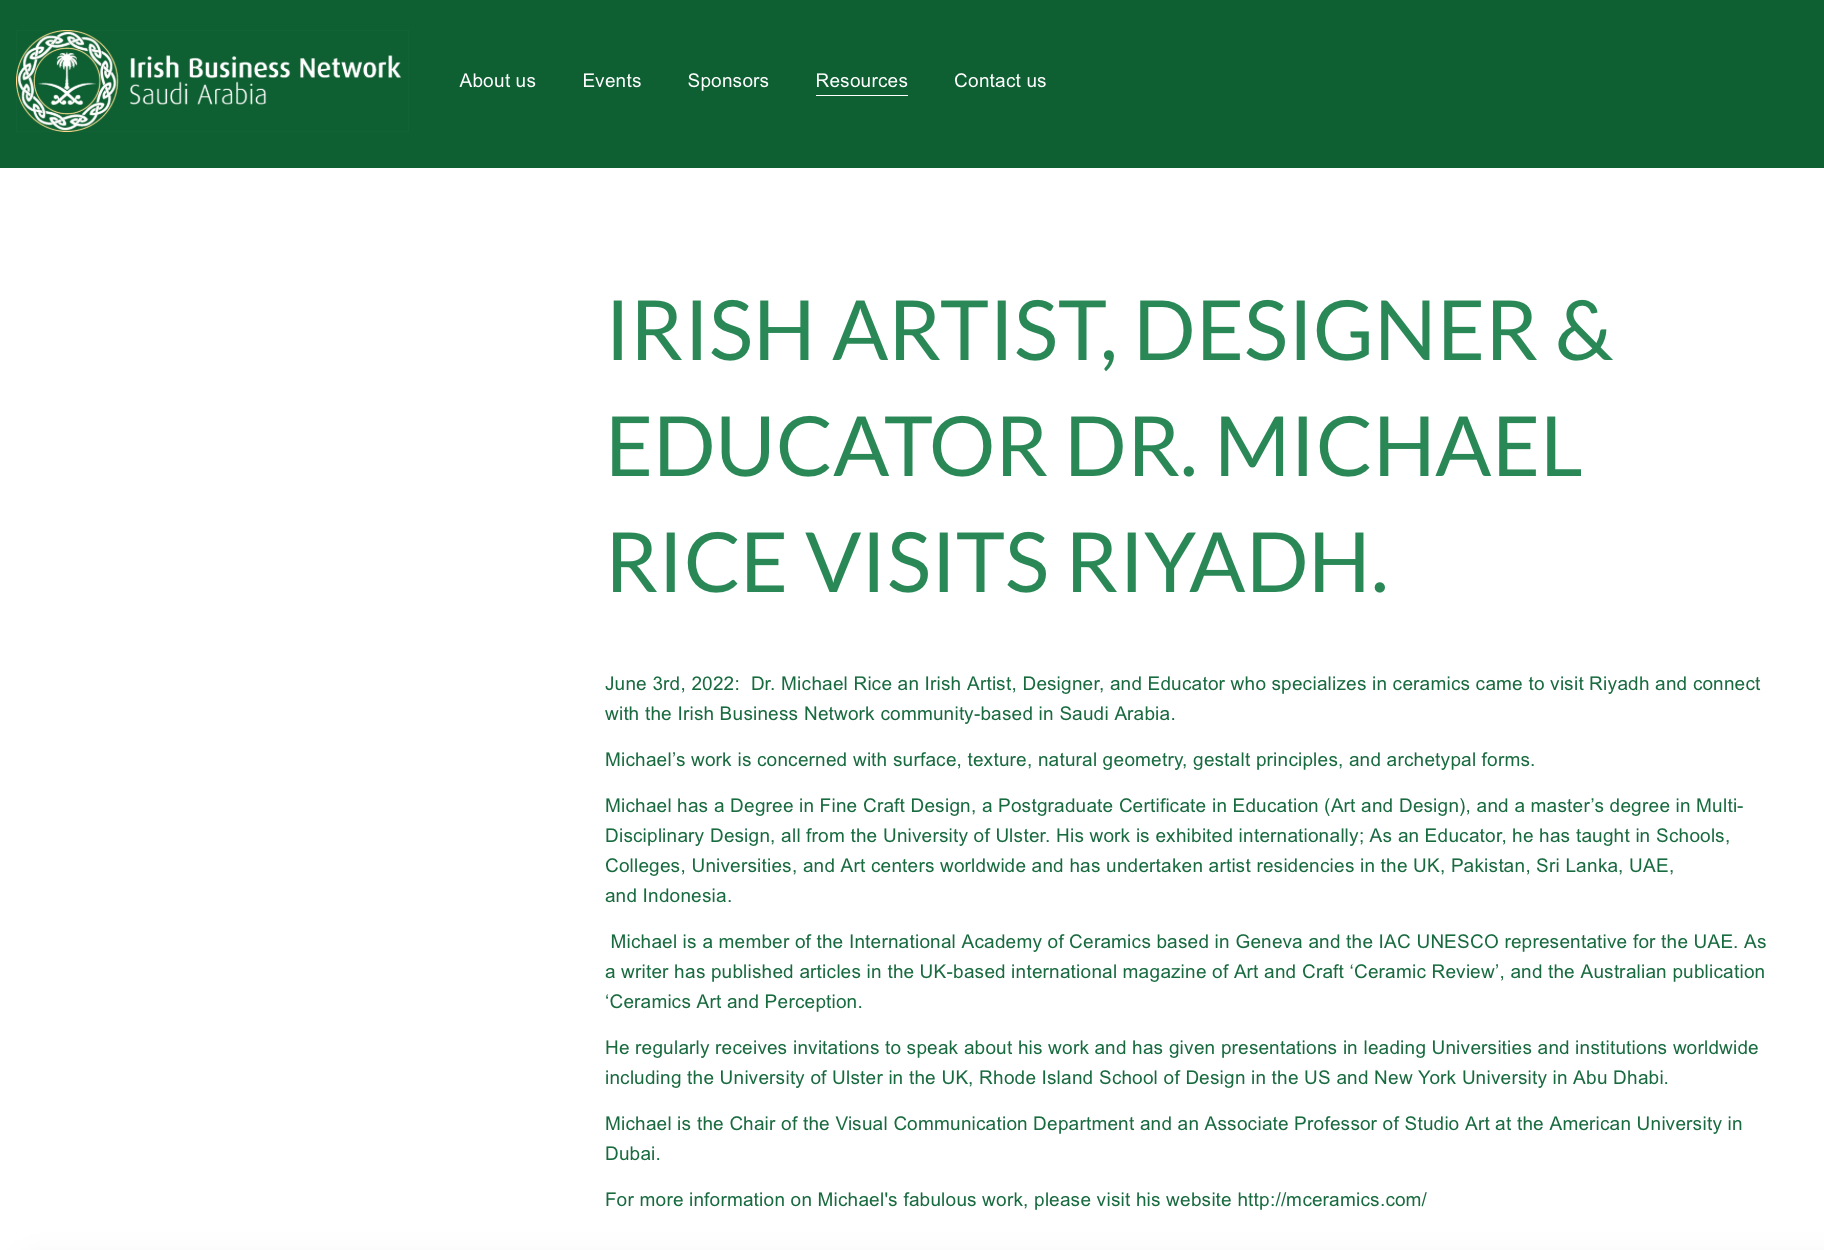  The Irish Business Network post on the Riyadh presentation at the Irish Embassy  